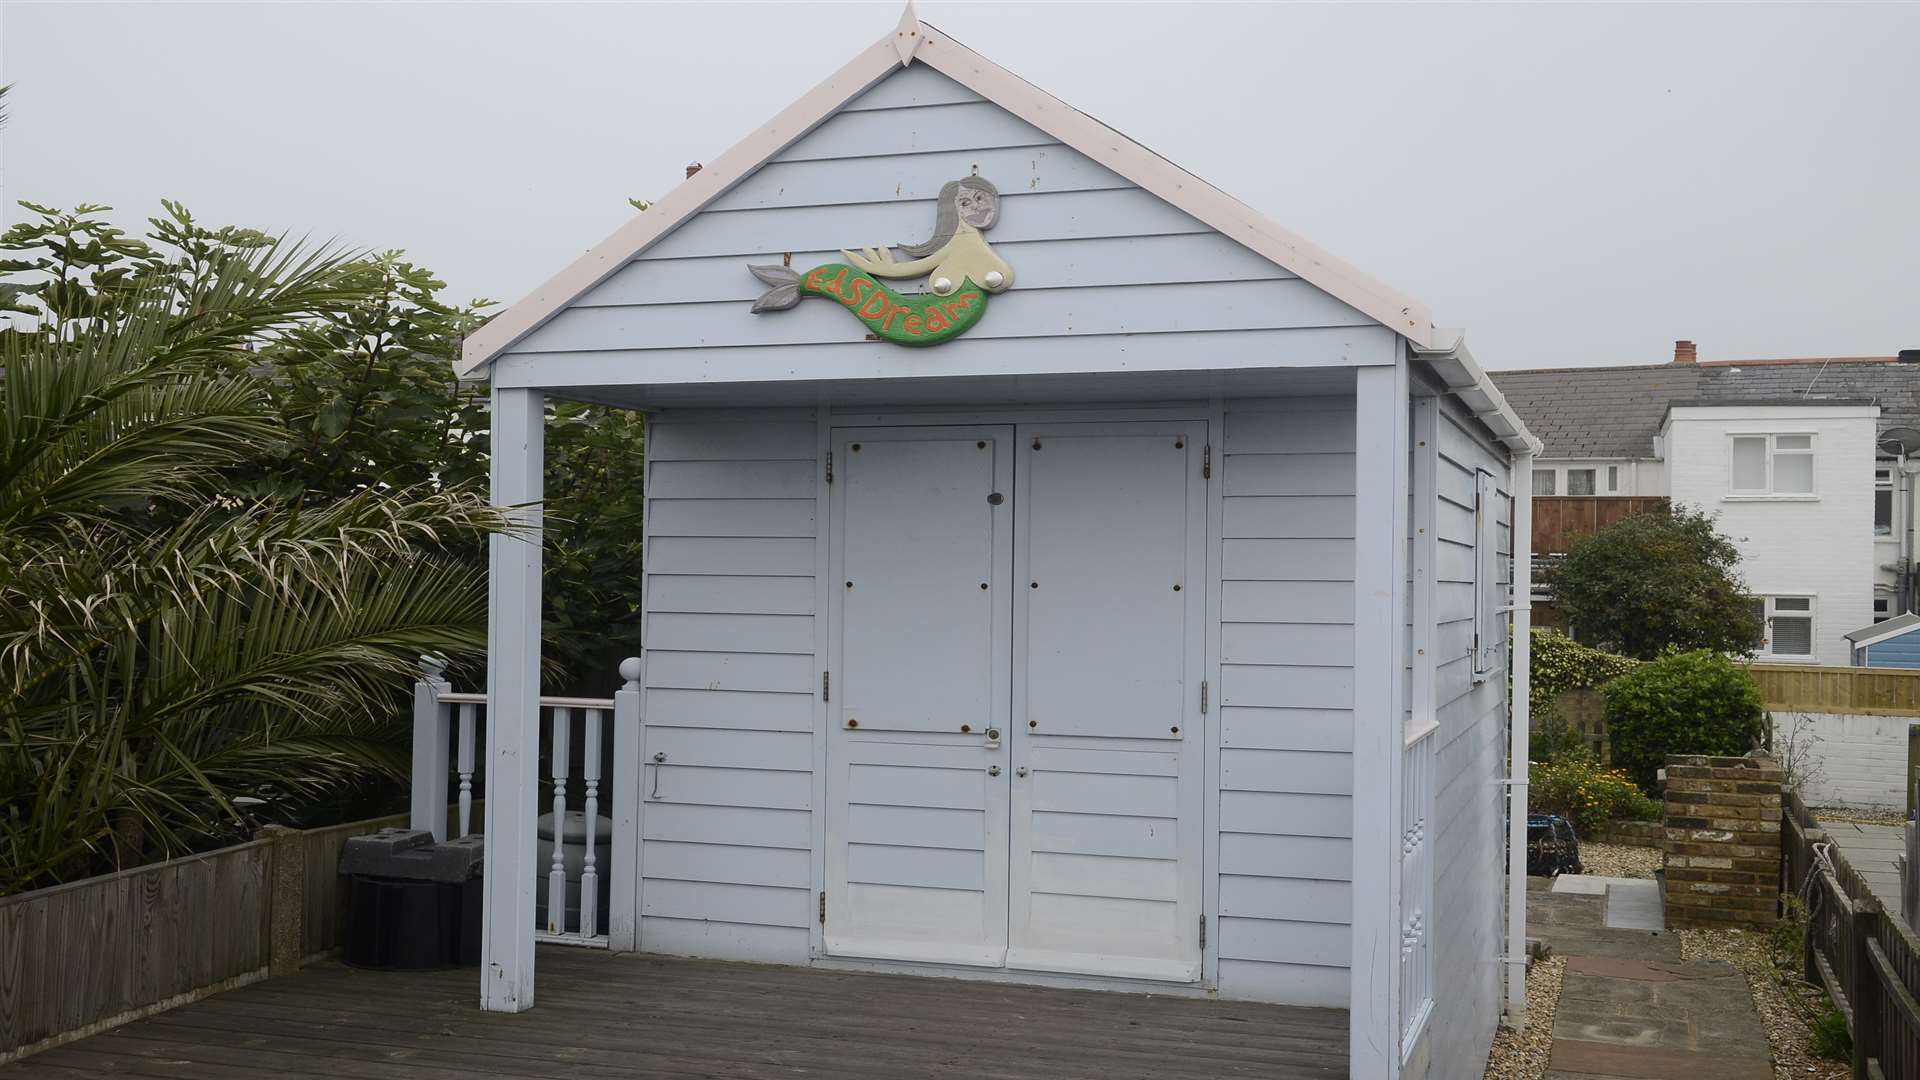 The beach hut has been described as a "rare beast"